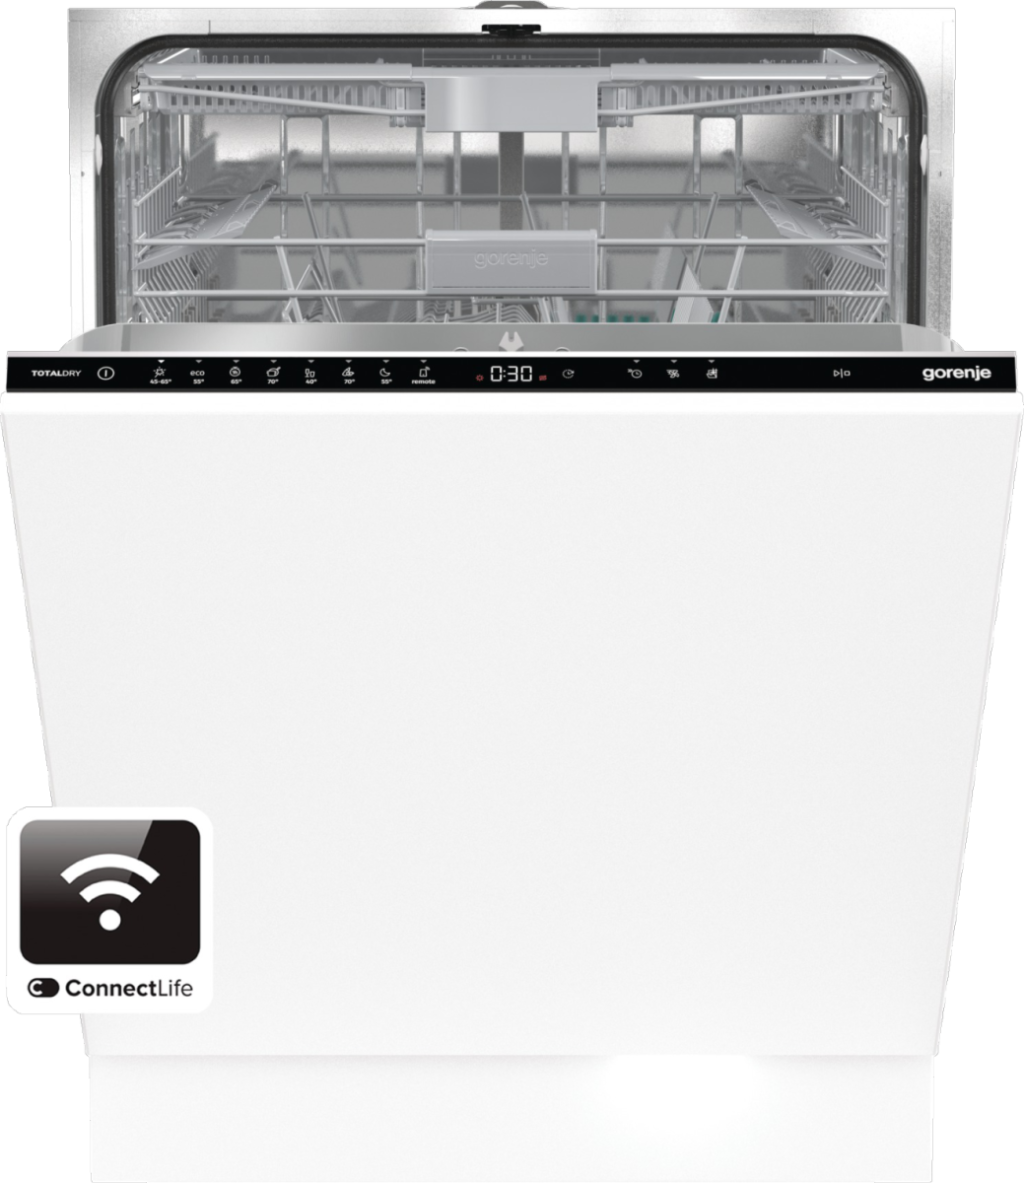 Built-in | Dishwasher | GV673C60 | Width 59.8 cm | Number of place settings 16 | Number of programs 7 | Energy efficiency class C | Display | AquaStop function